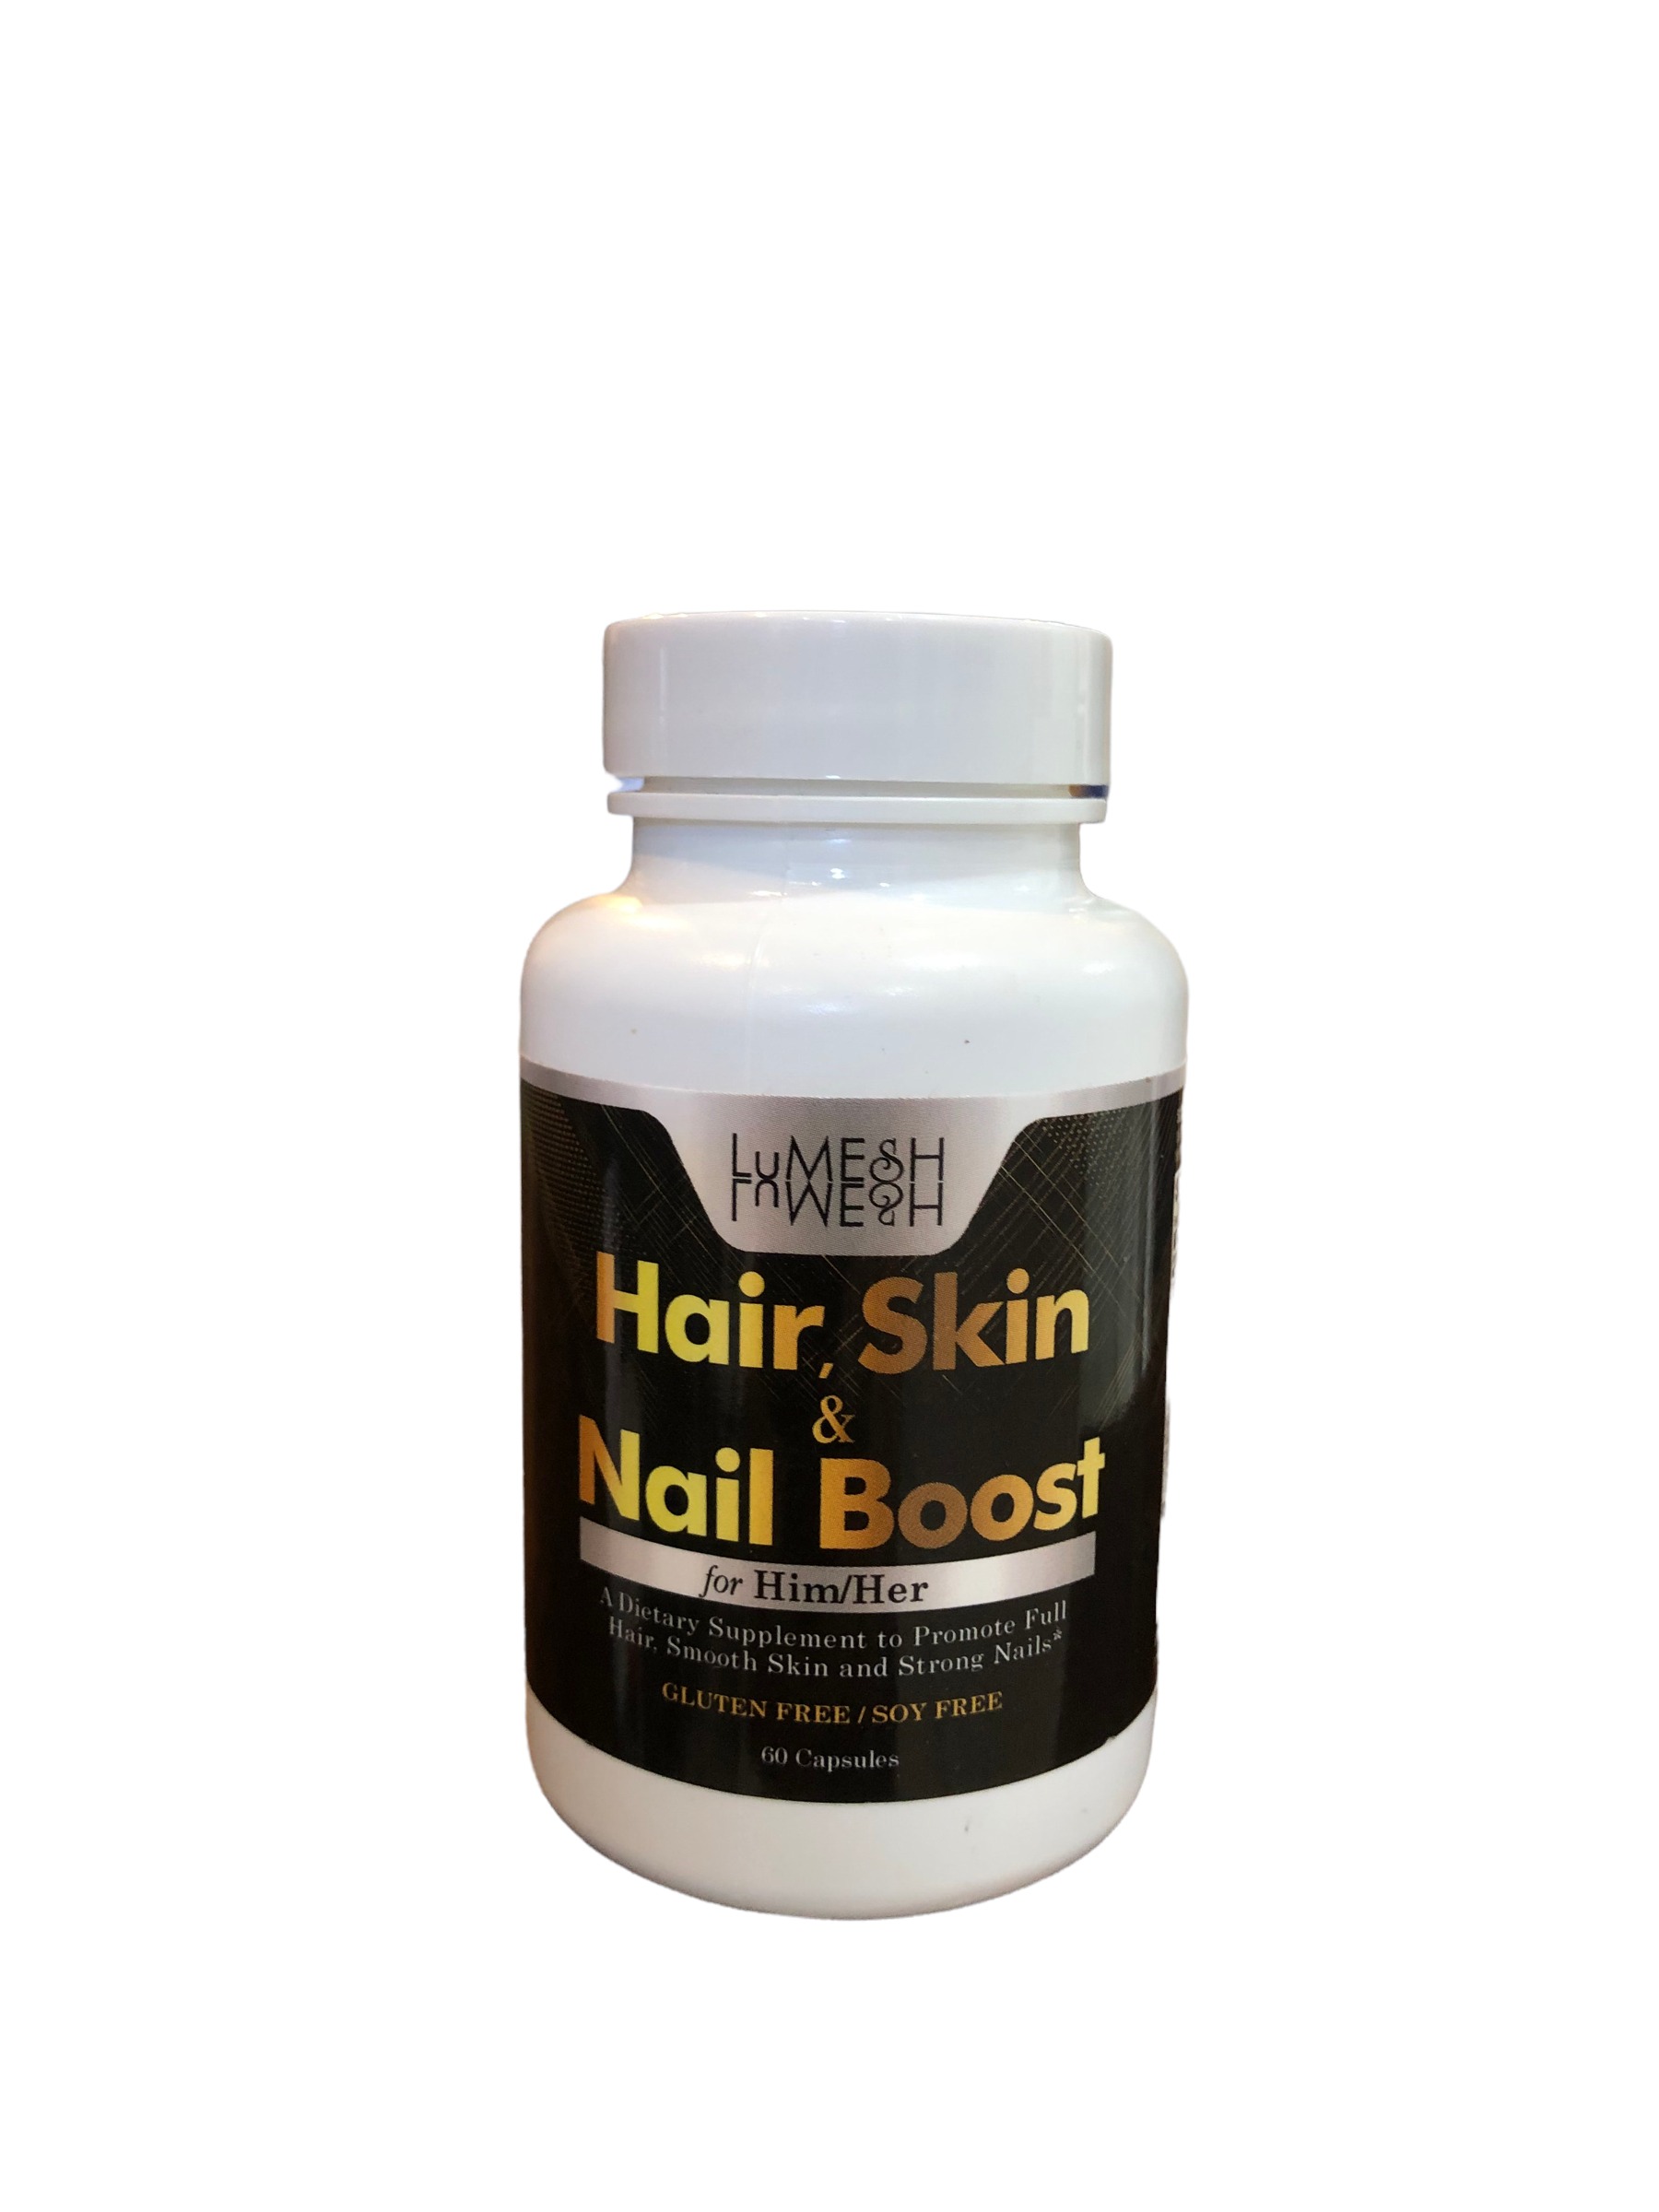 Hair Skin & Nail Boost for men & women